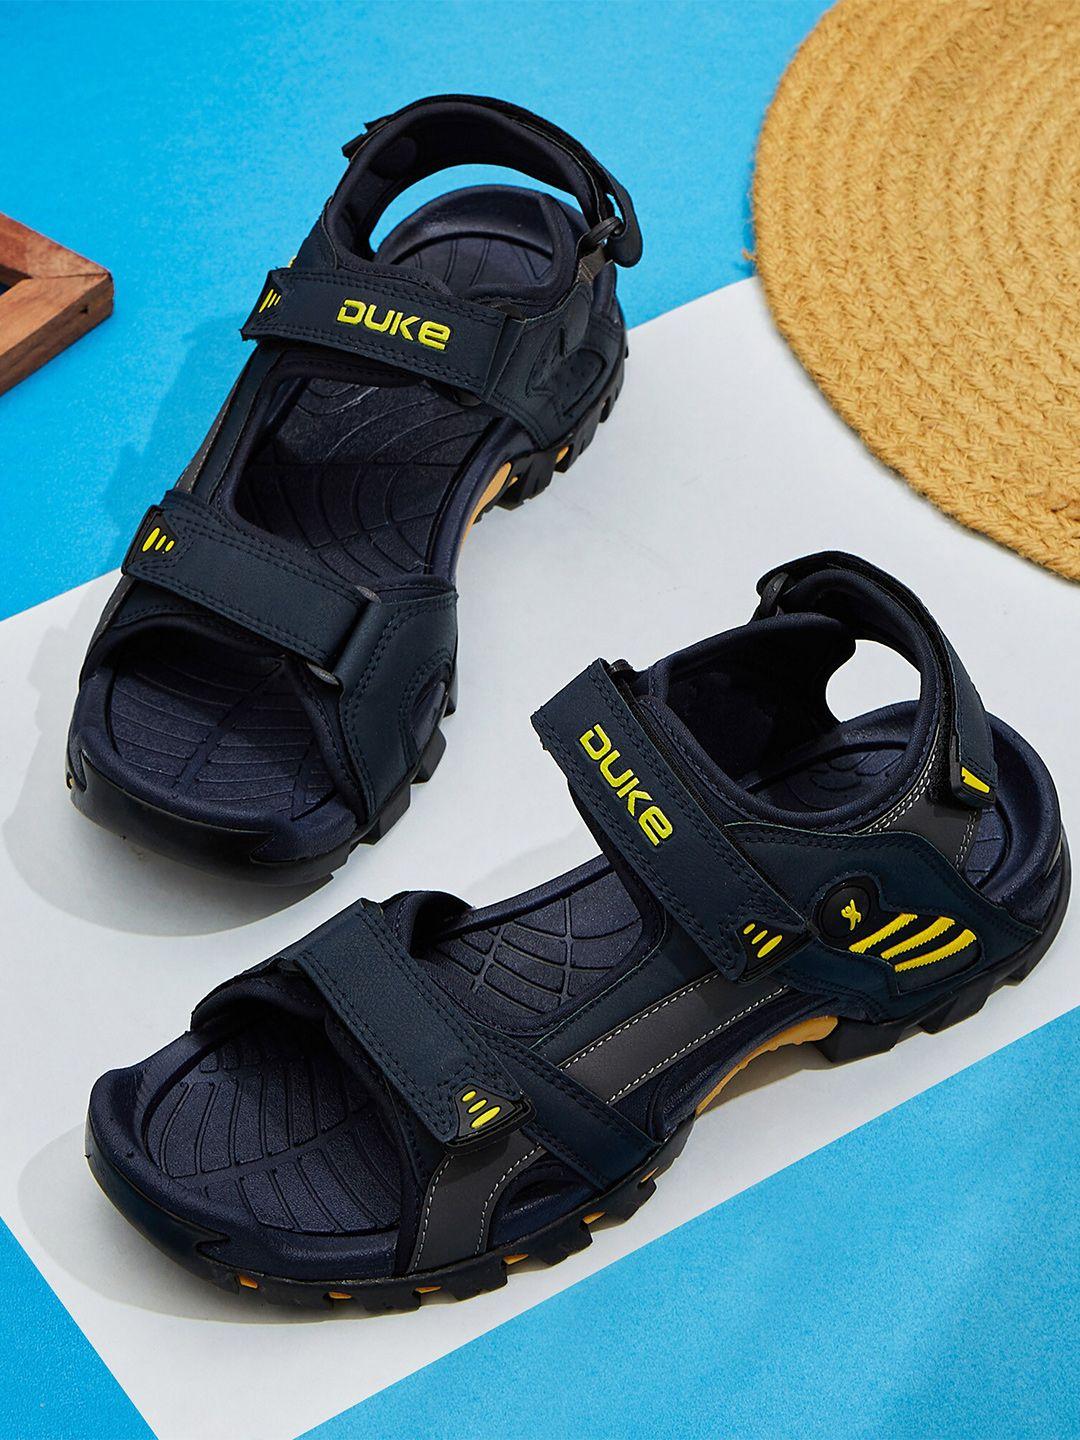 duke-men-textured-sports-sandals